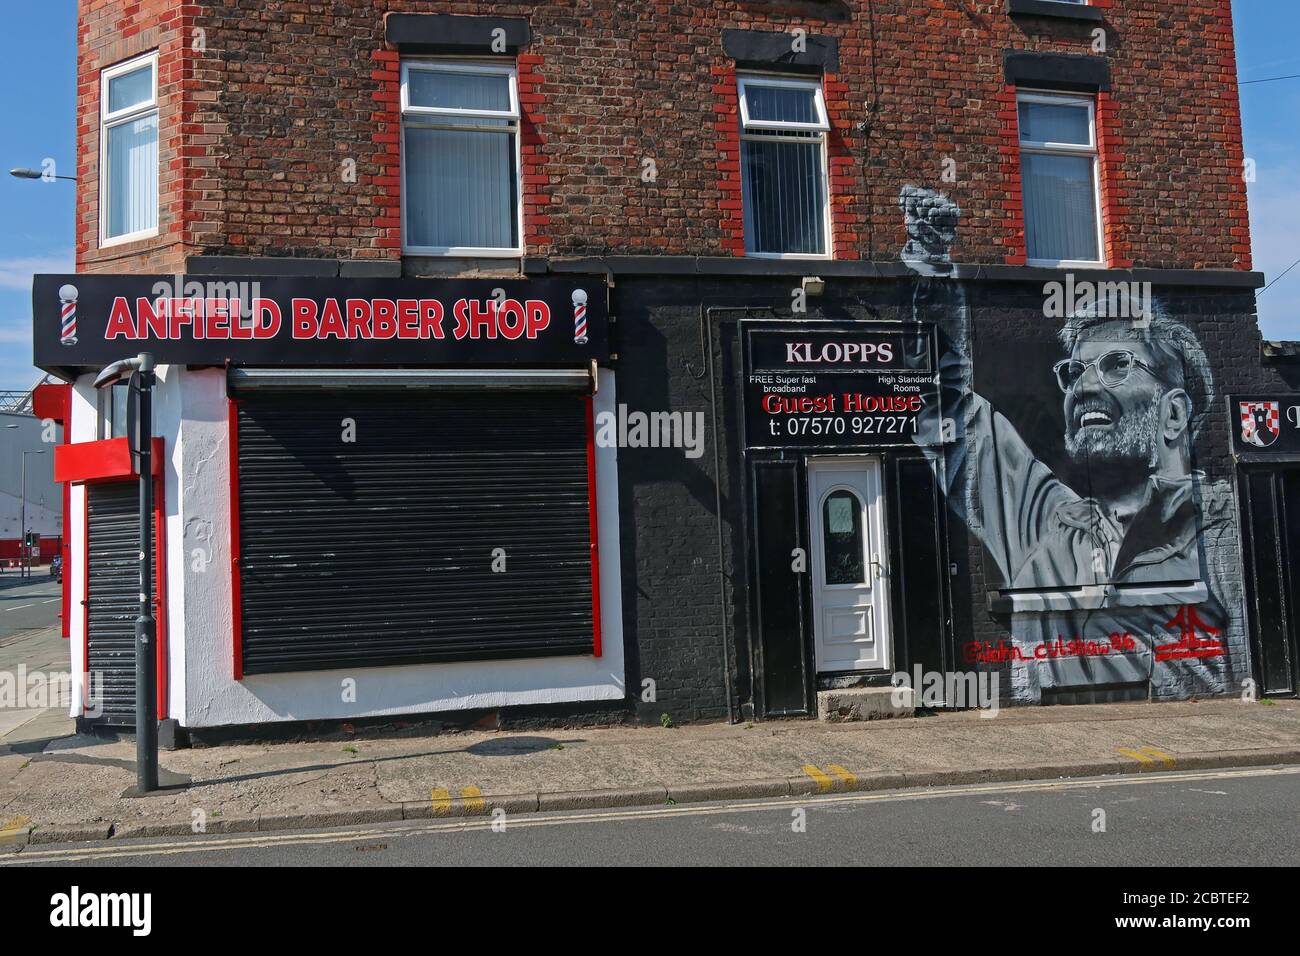 Anfield barber Shop, Klopps B&B, LFC, Liverpool football Club, Anfield, Premier League, Merseyside, nord-ouest de l'Angleterre, Royaume-Uni, L4 2UZ Banque D'Images